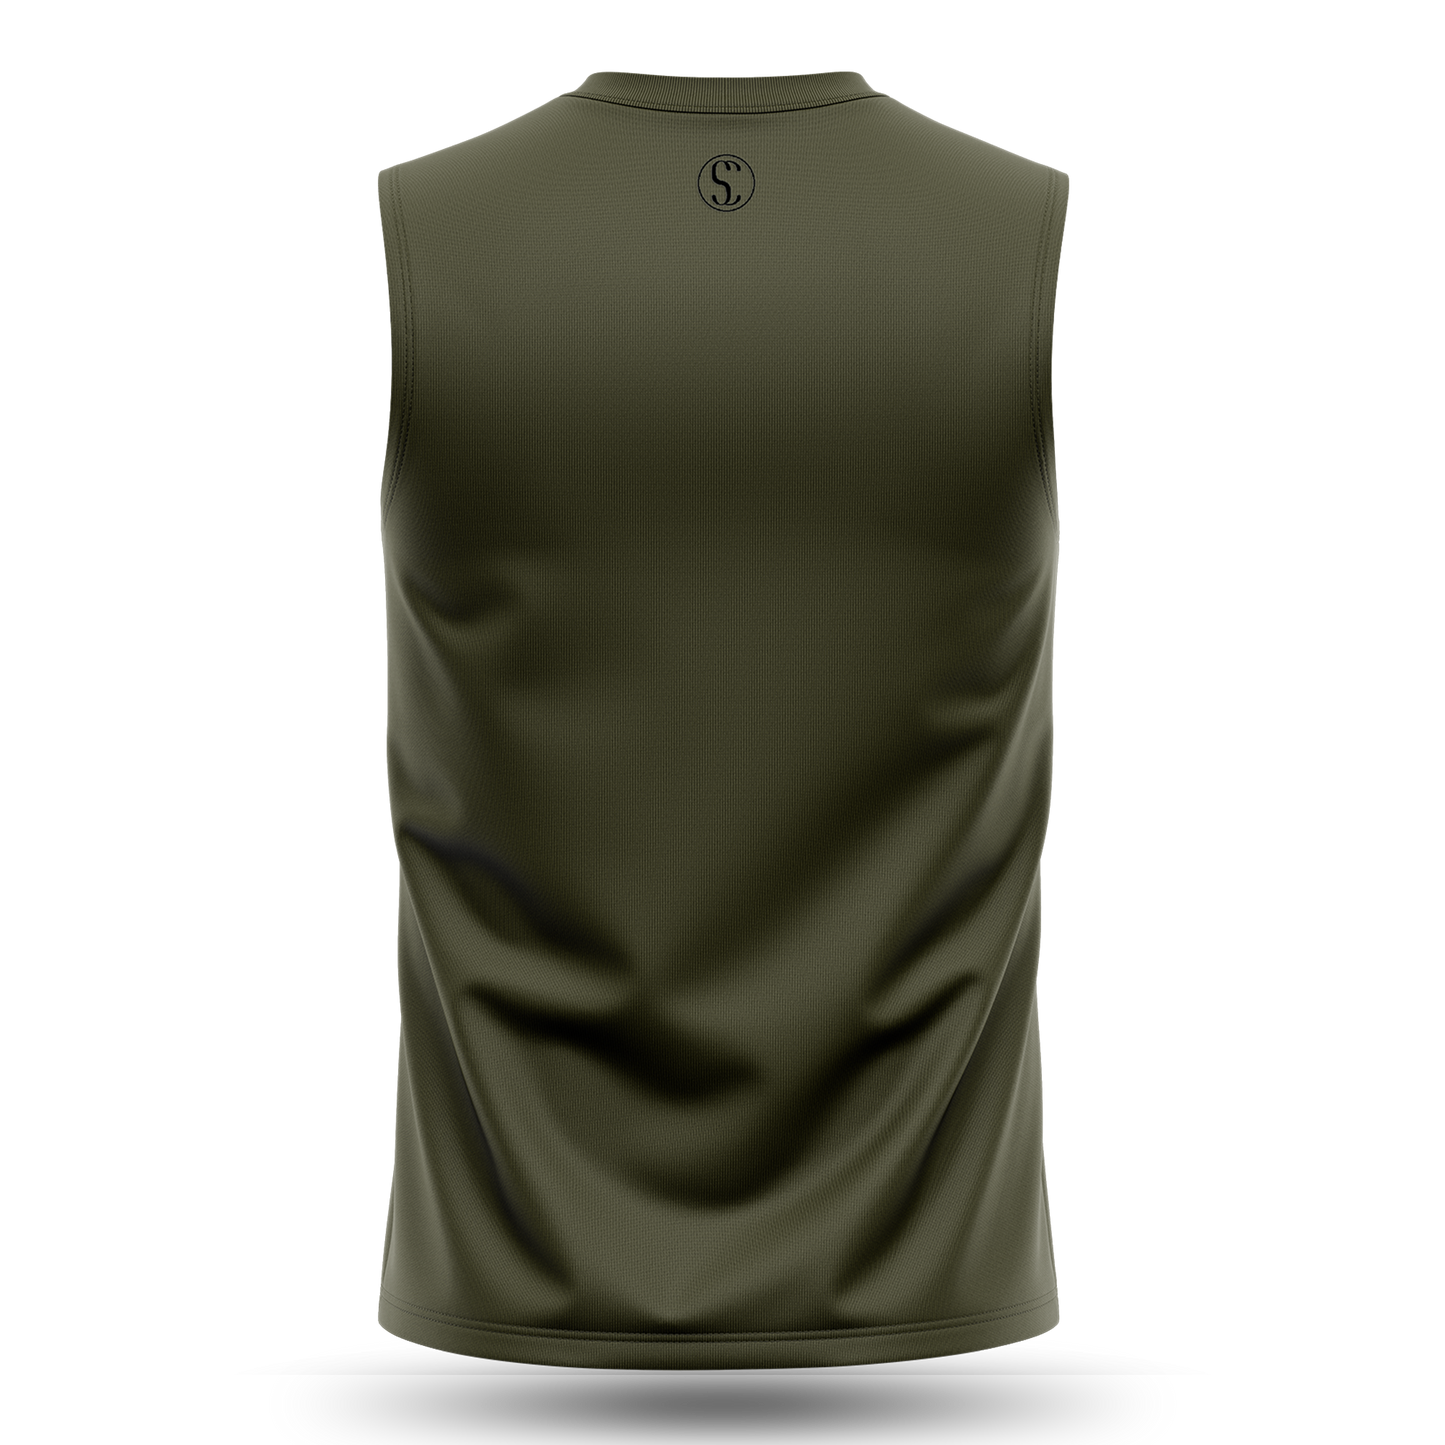 Men's Olive Green Cotton Tank Top Sleeveless Shirt